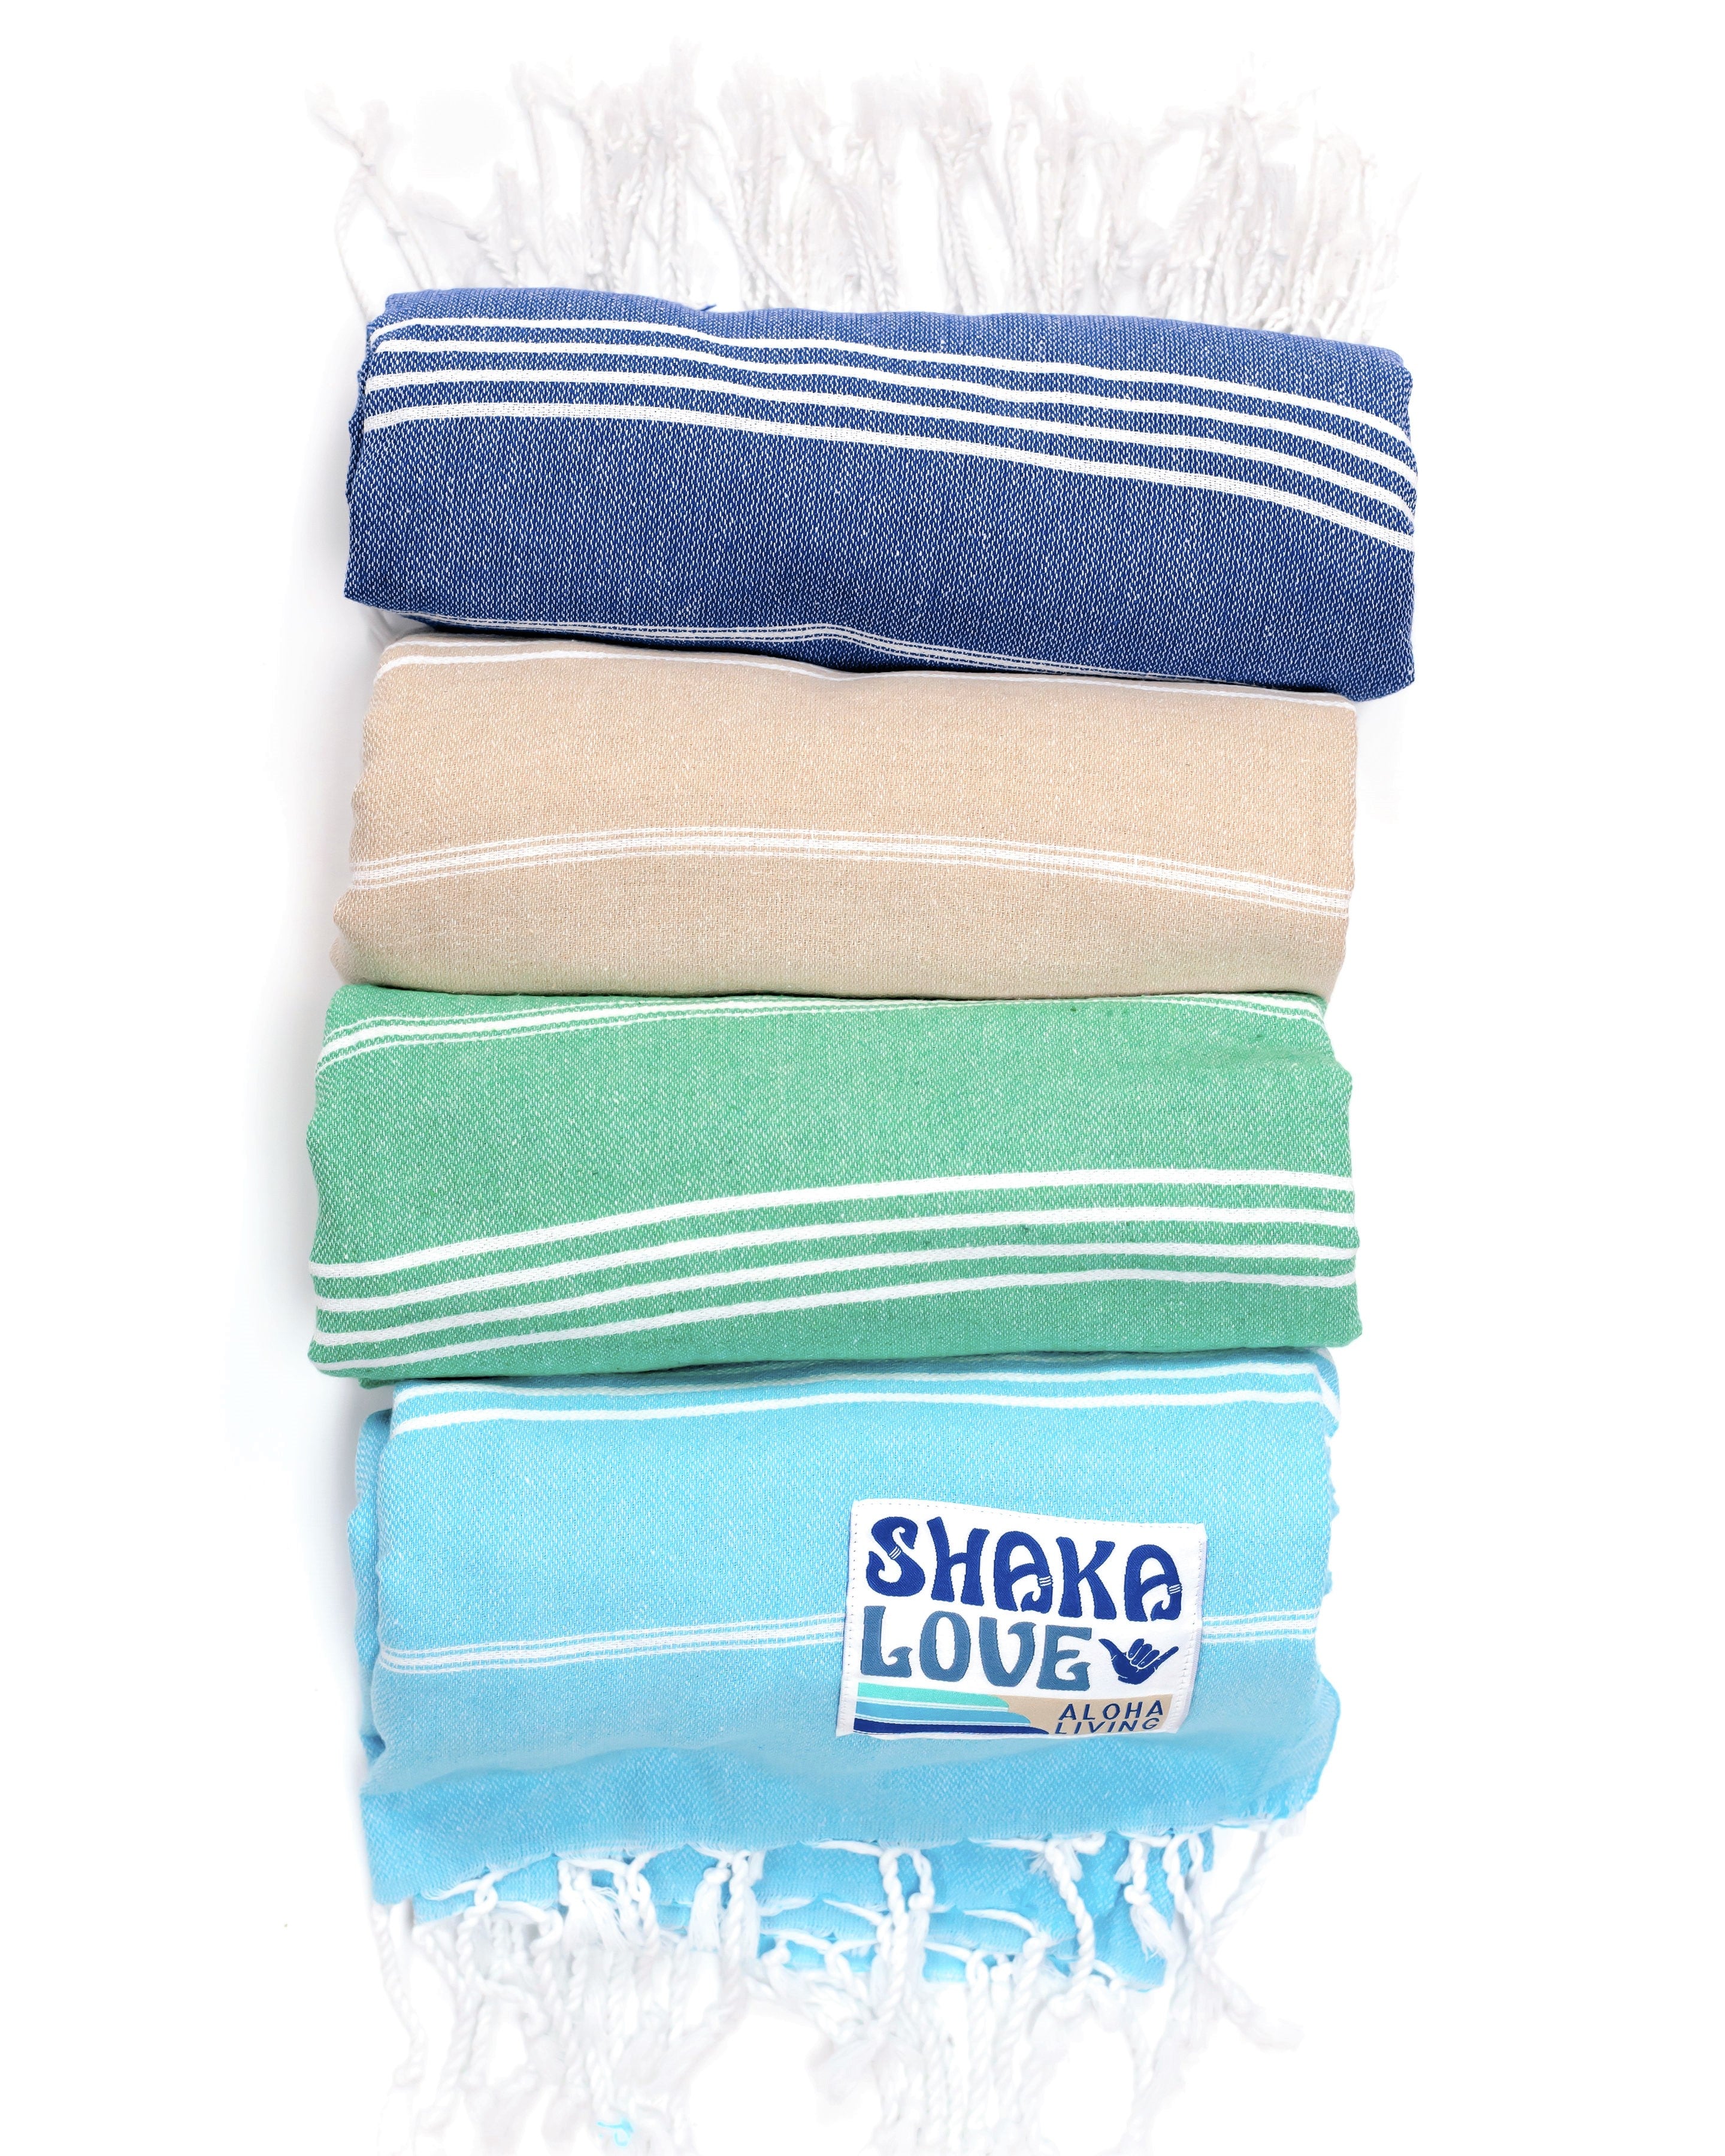 SHAKA CLASSIC Bundle 1: Includes FOUR top 4 Shaka Classic Beach Towels